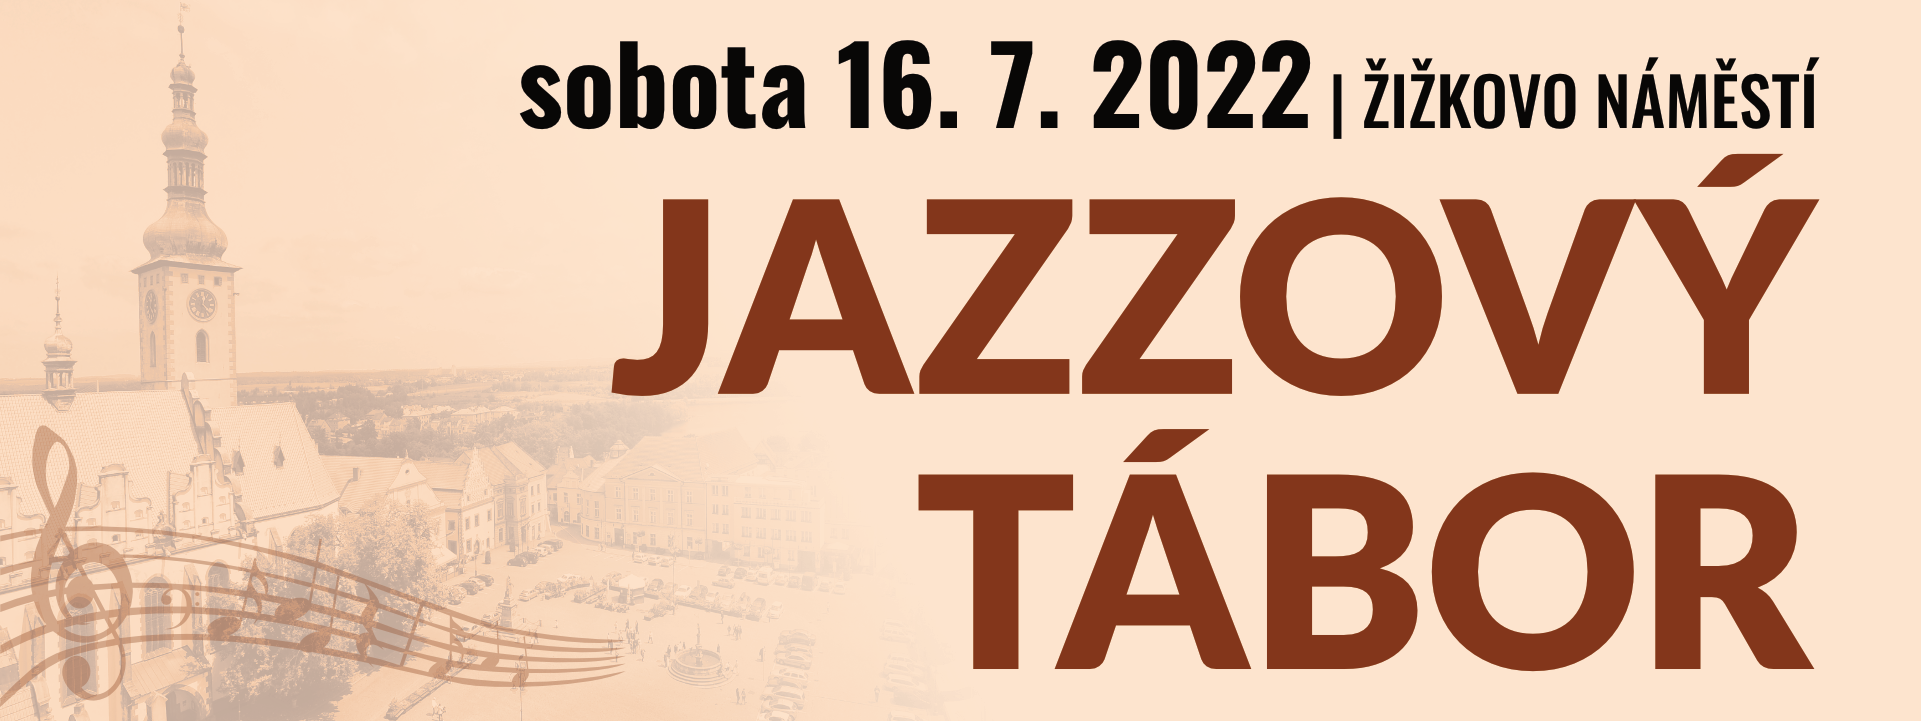 jazzovy-tabor-web.png